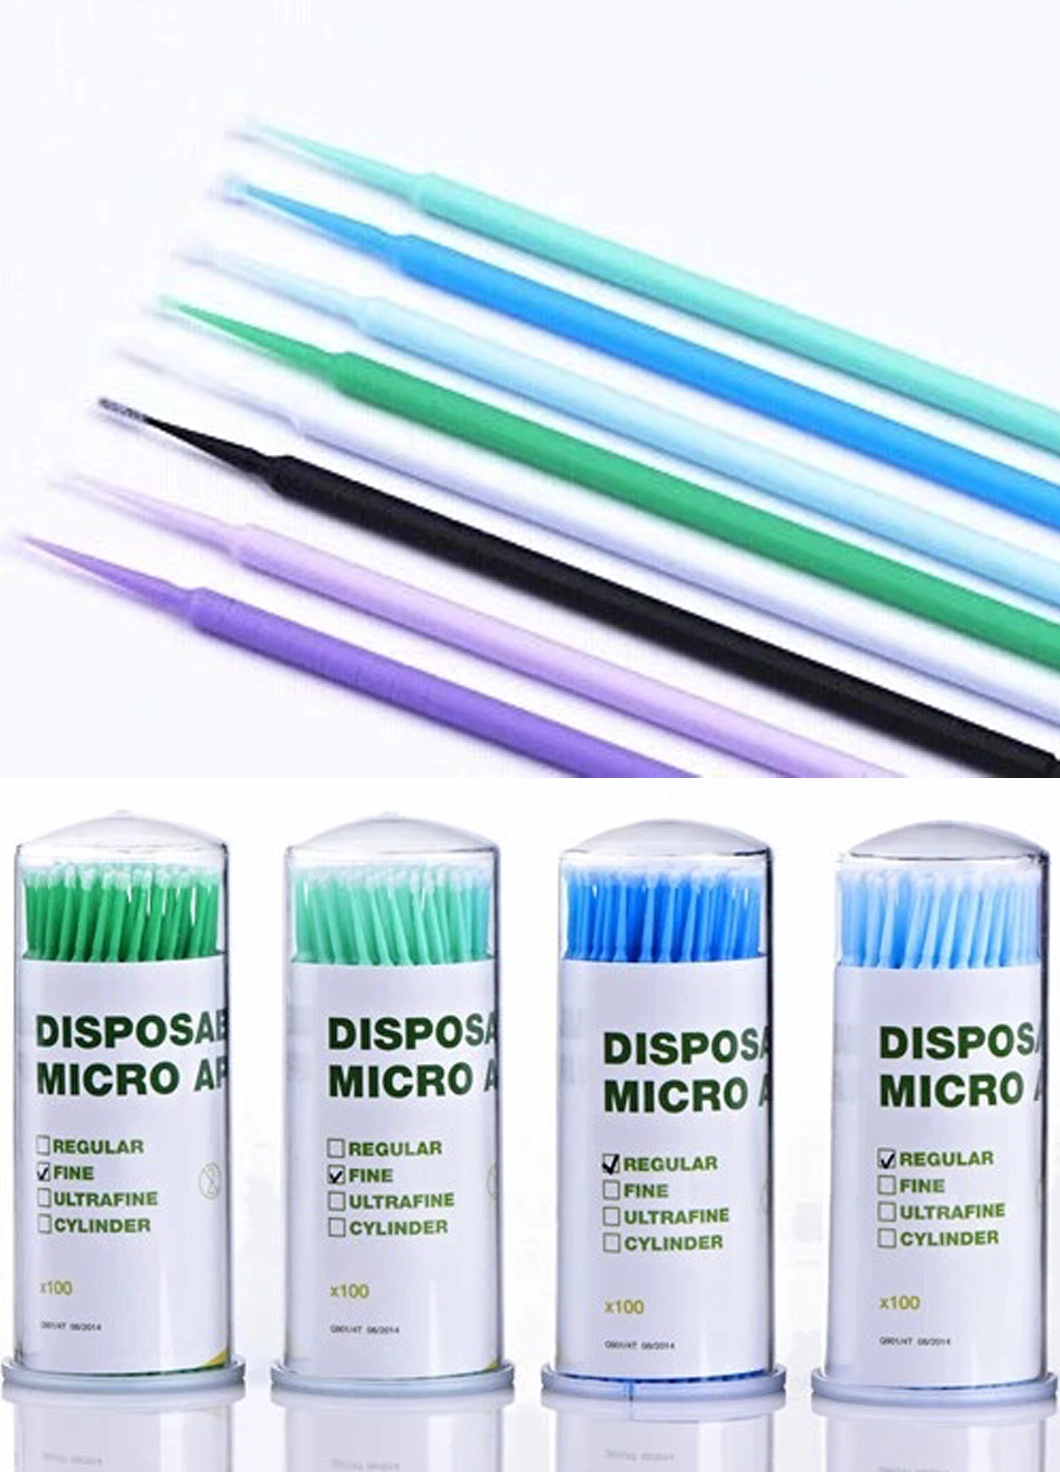 Disposable Dental Applicator Stick Micro Applicator